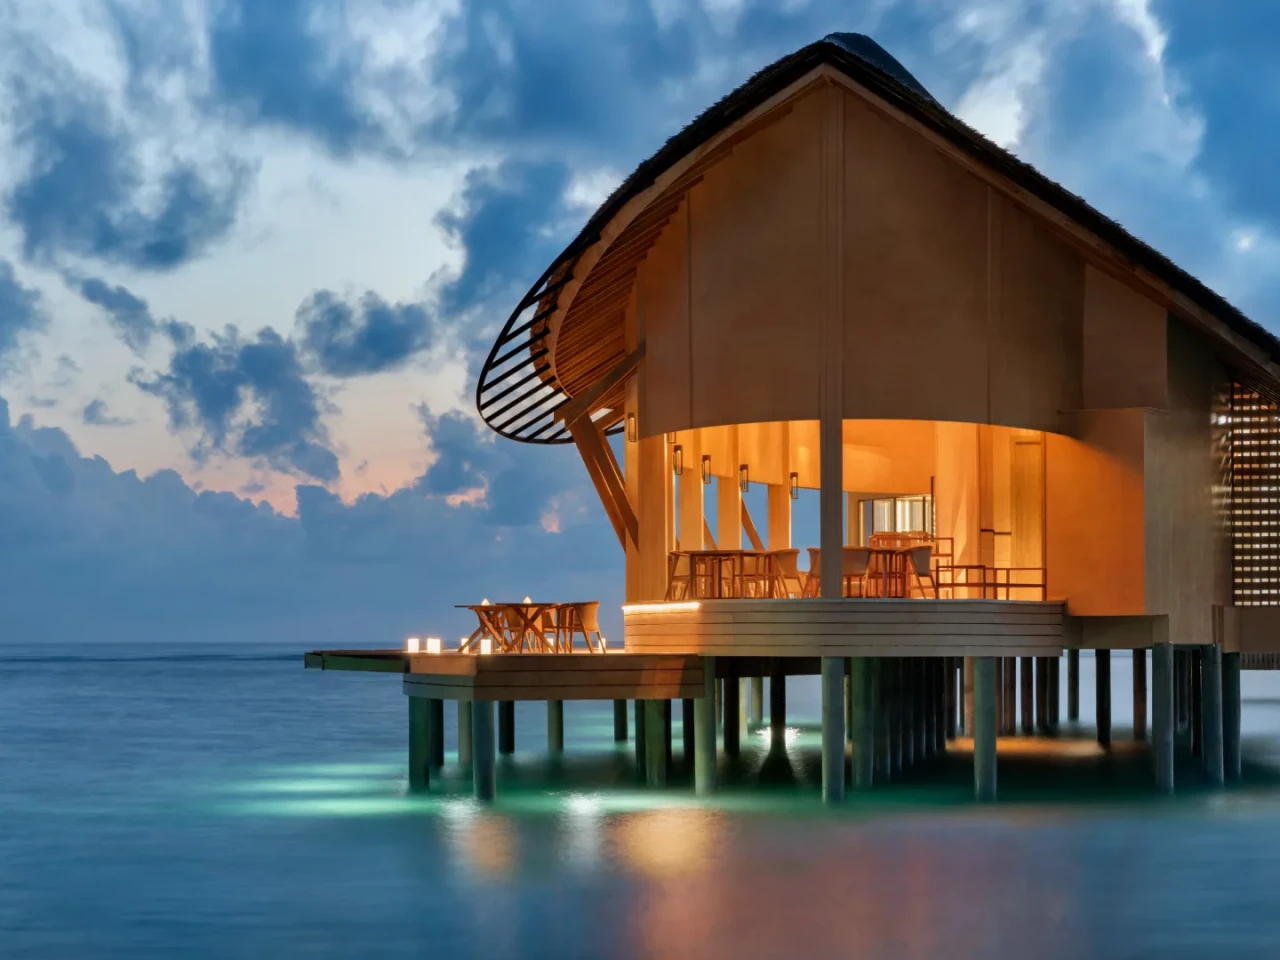 Hilton Maldives Amingiri Resort  Spa - Meemu